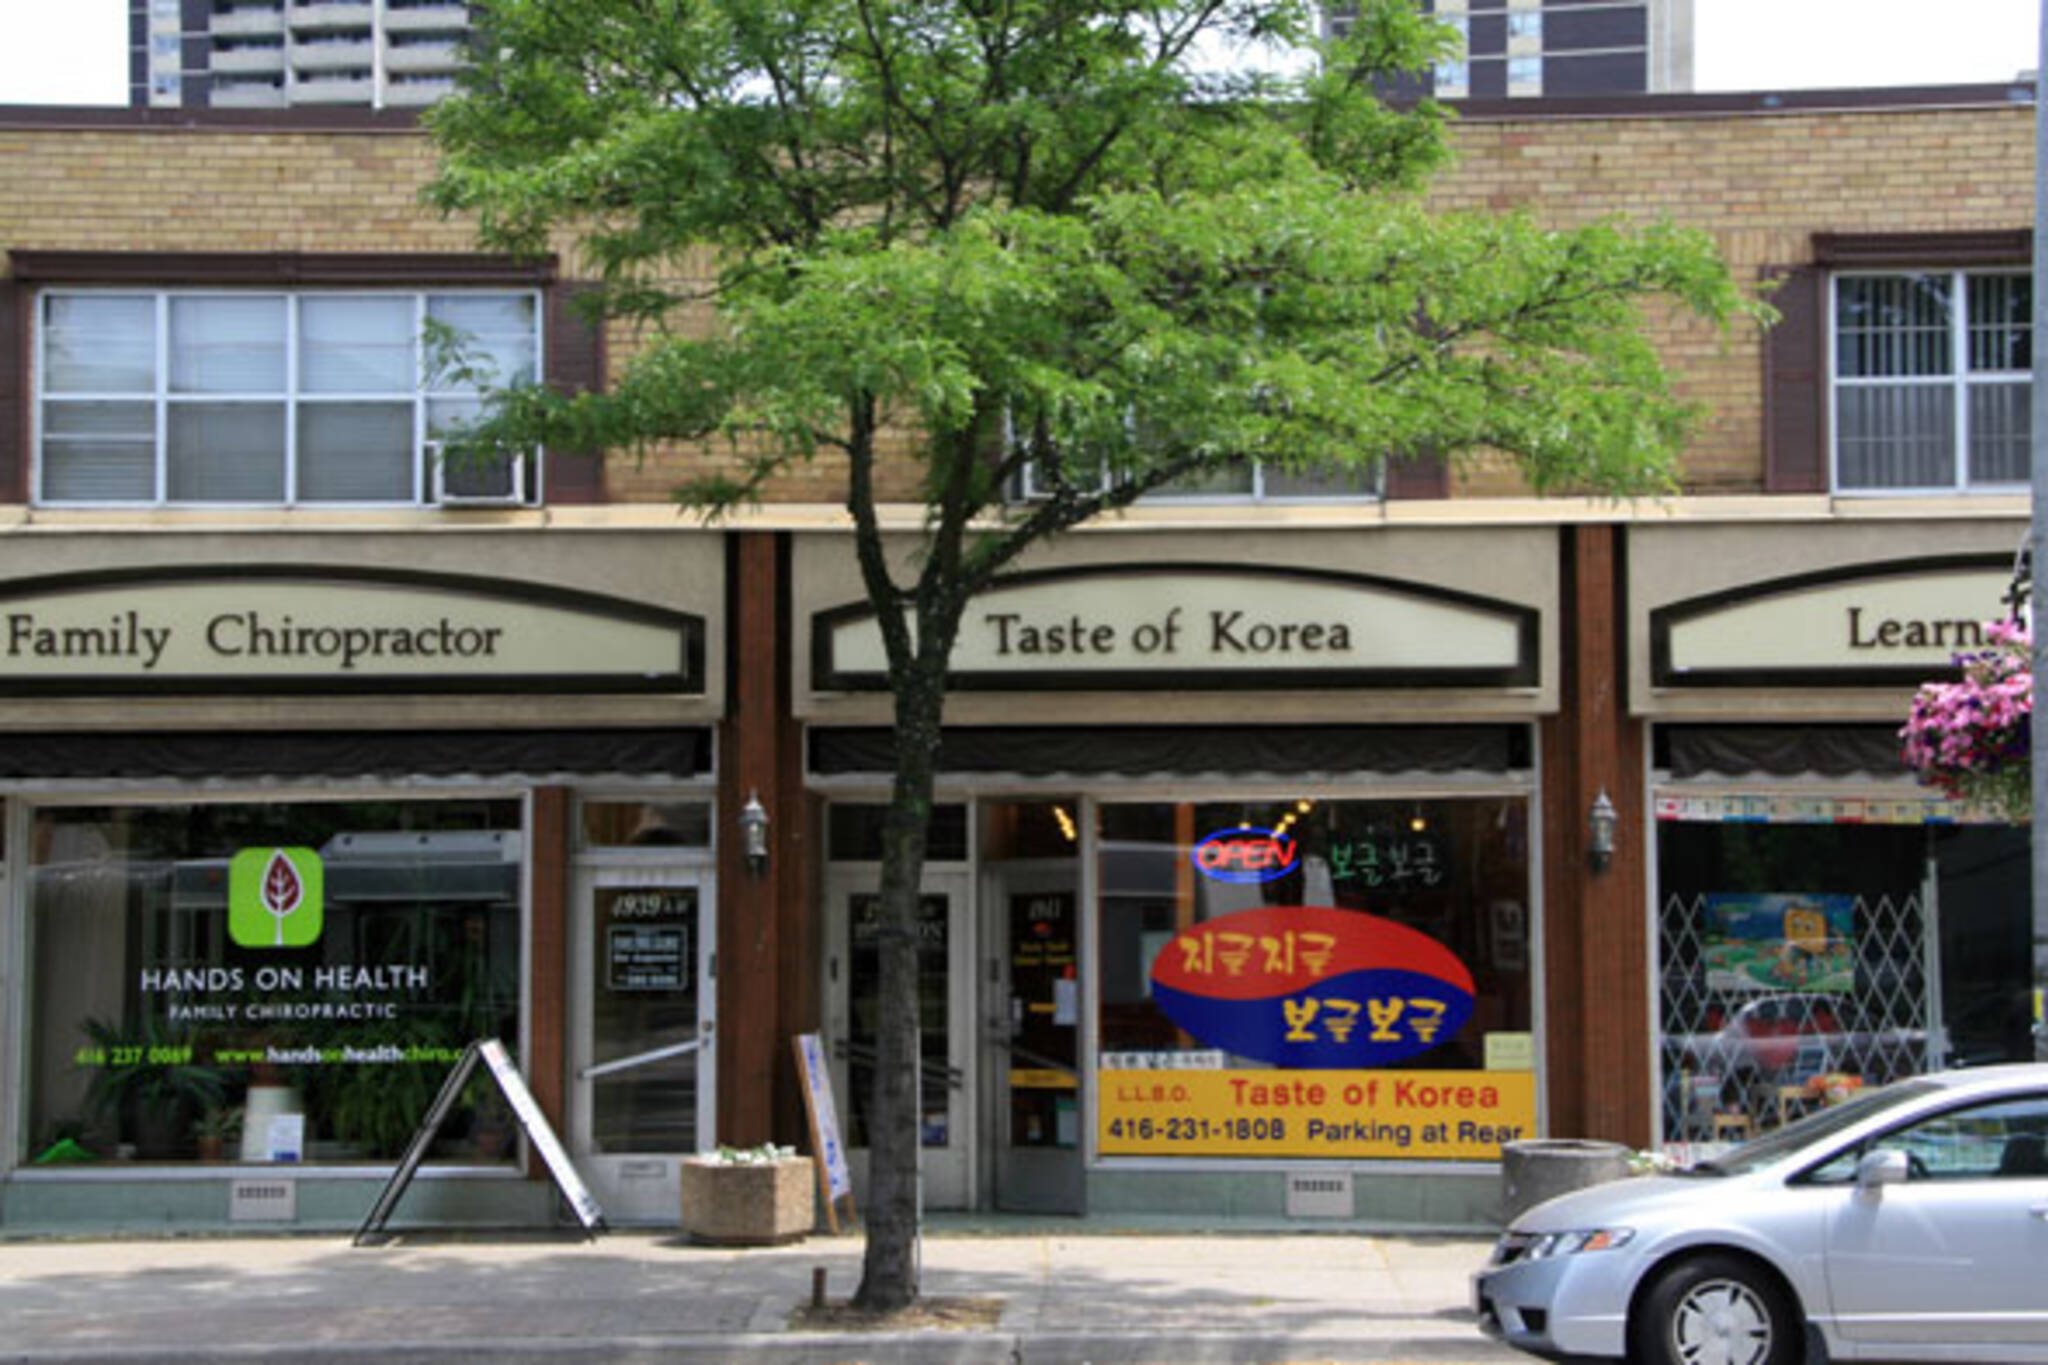 Taste of Korea